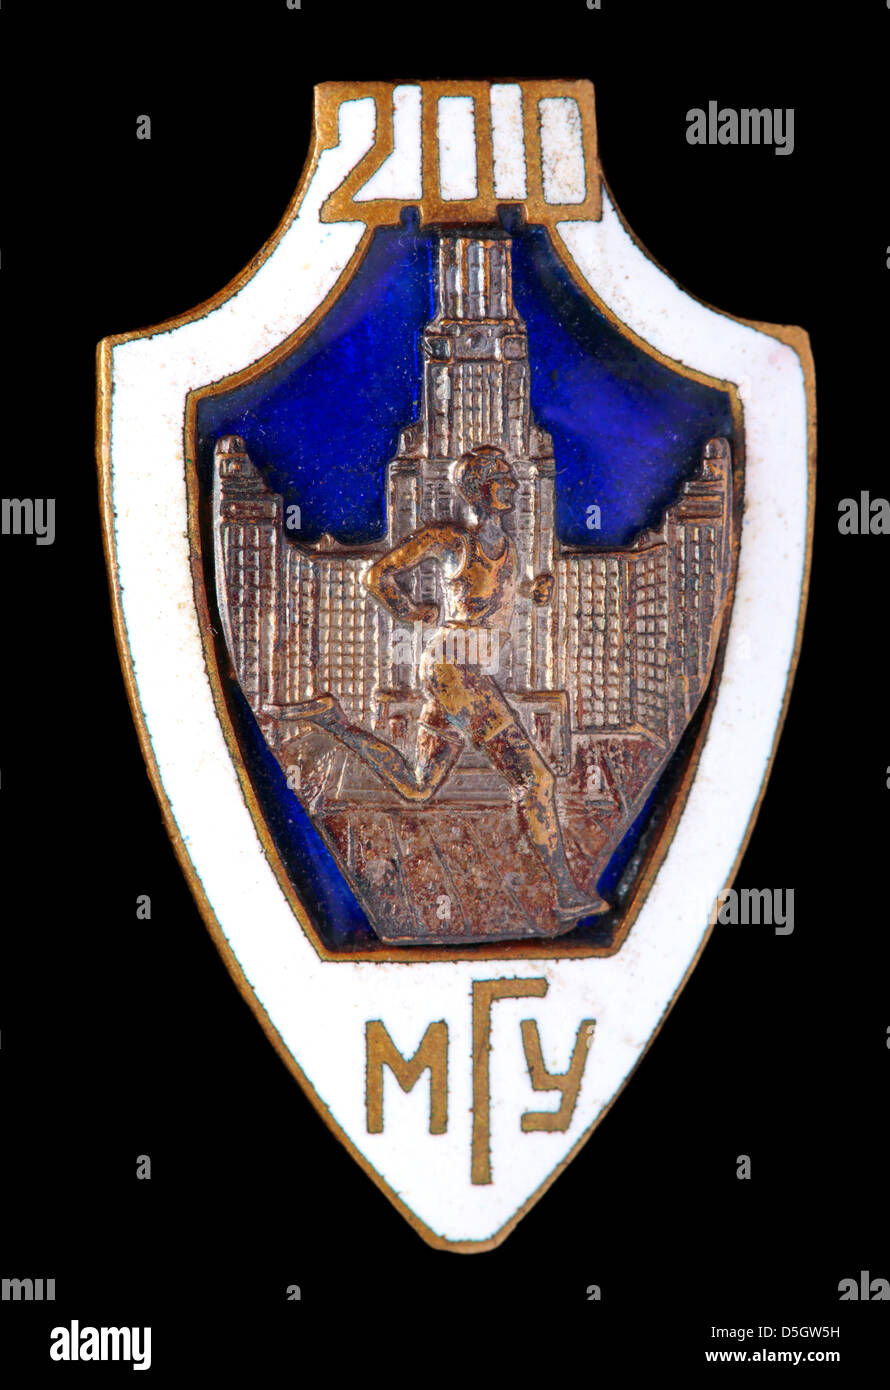 Moskauer staatliche Universität, Russland, Pin badge Stockfoto